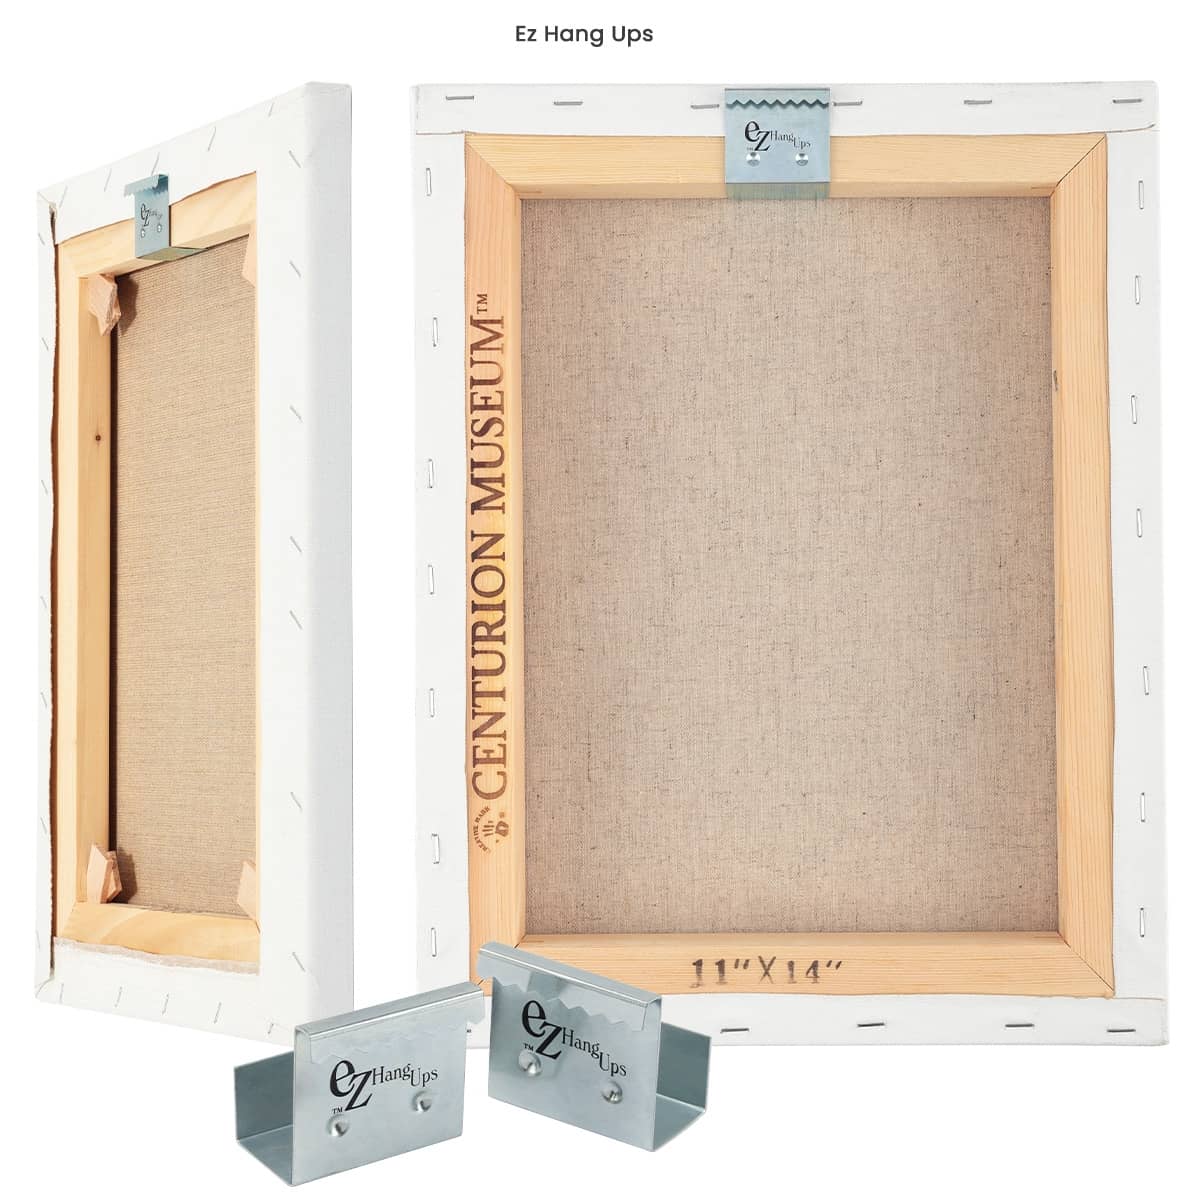 EZ Art Shippers - Art Shipping Boxes - JerrysArtarama.com